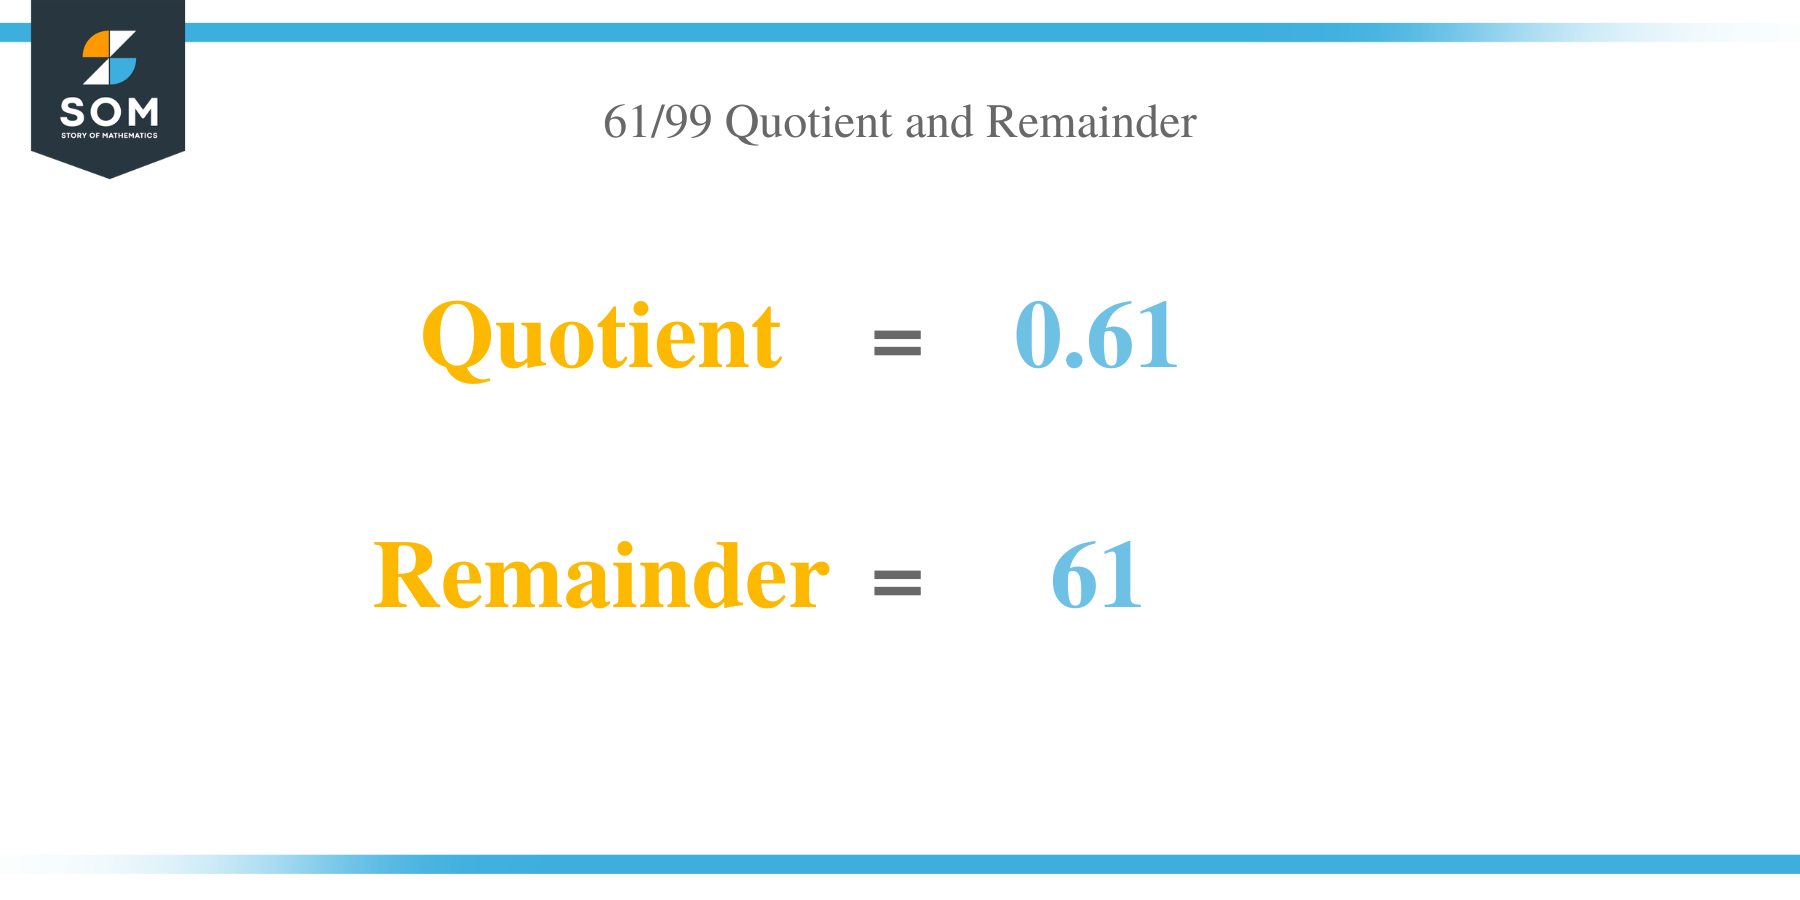 Quotient and Remainder of 61 per 99 1